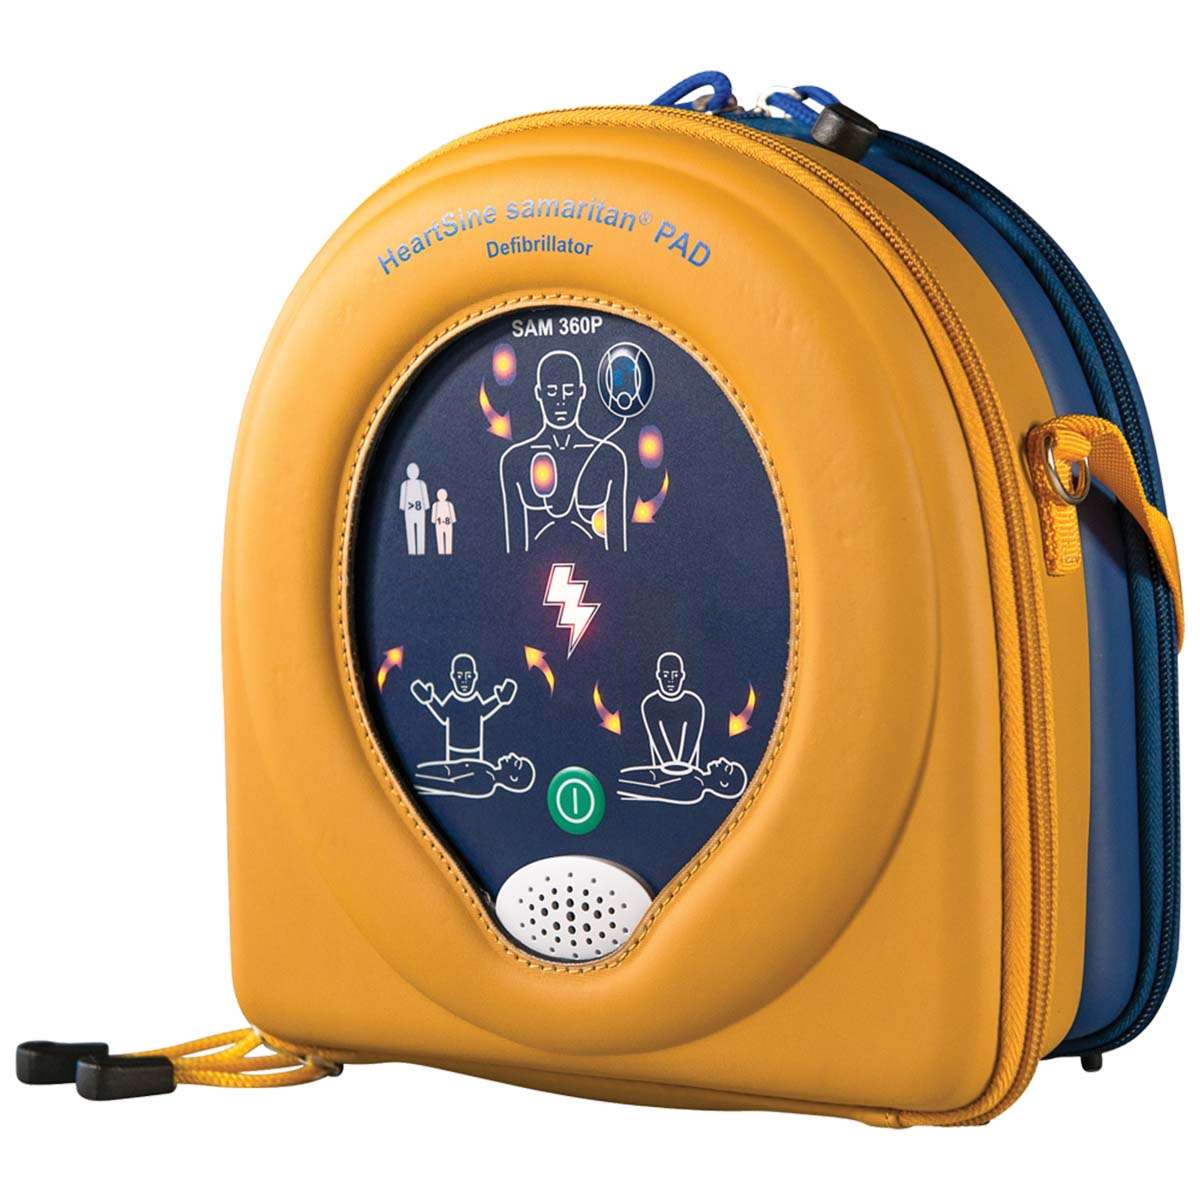 Heartsine Samaritan 360P Fully-Automatic AED Defibrillator